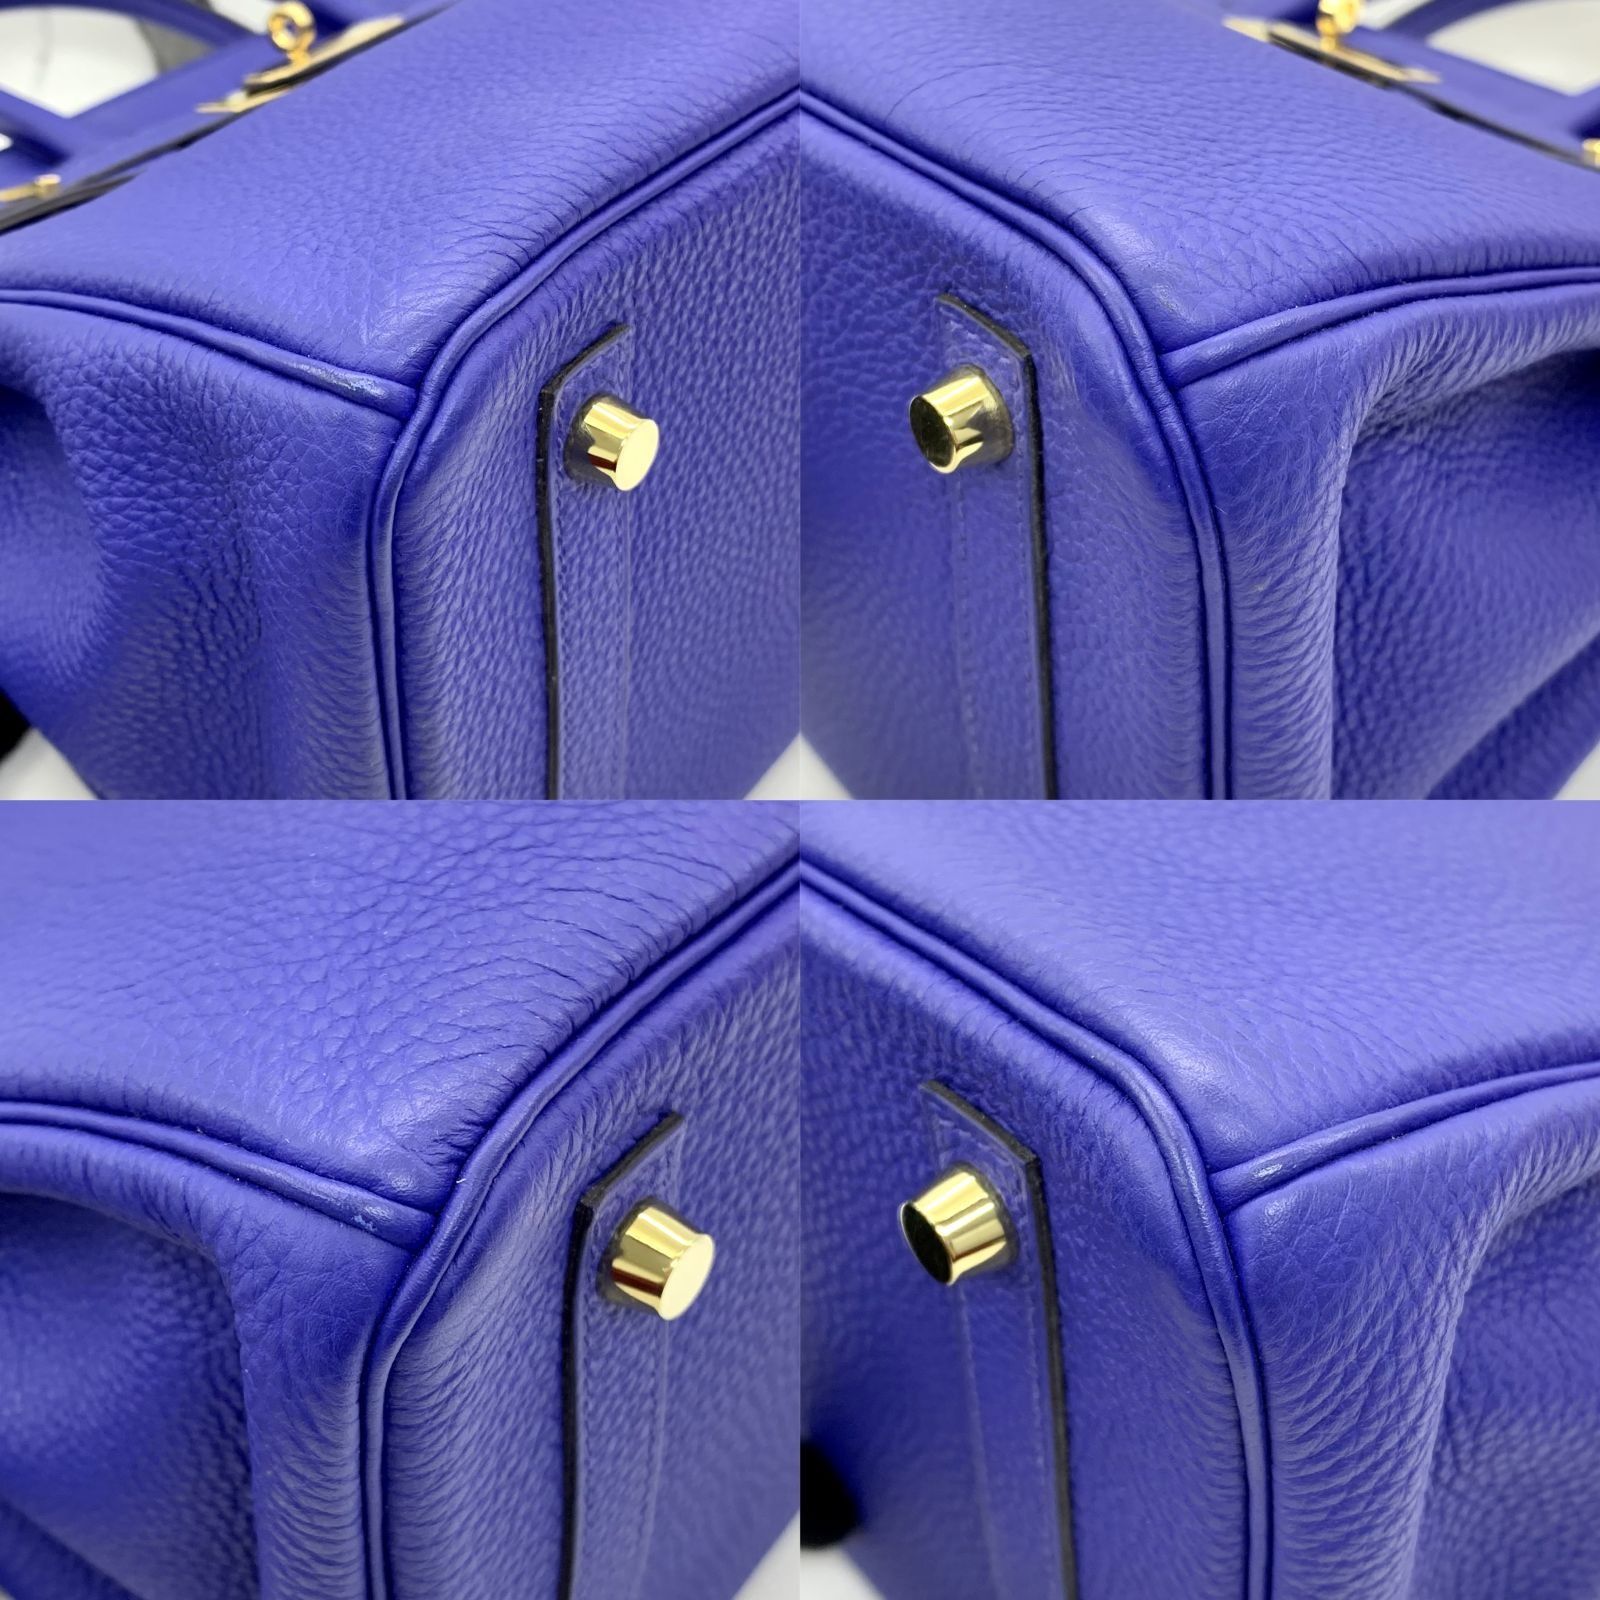 Authentic Hermes Bleu Indigo Togo Leather Lindy 30 Handbag/Shoulder Ba –  Paris Station Shop